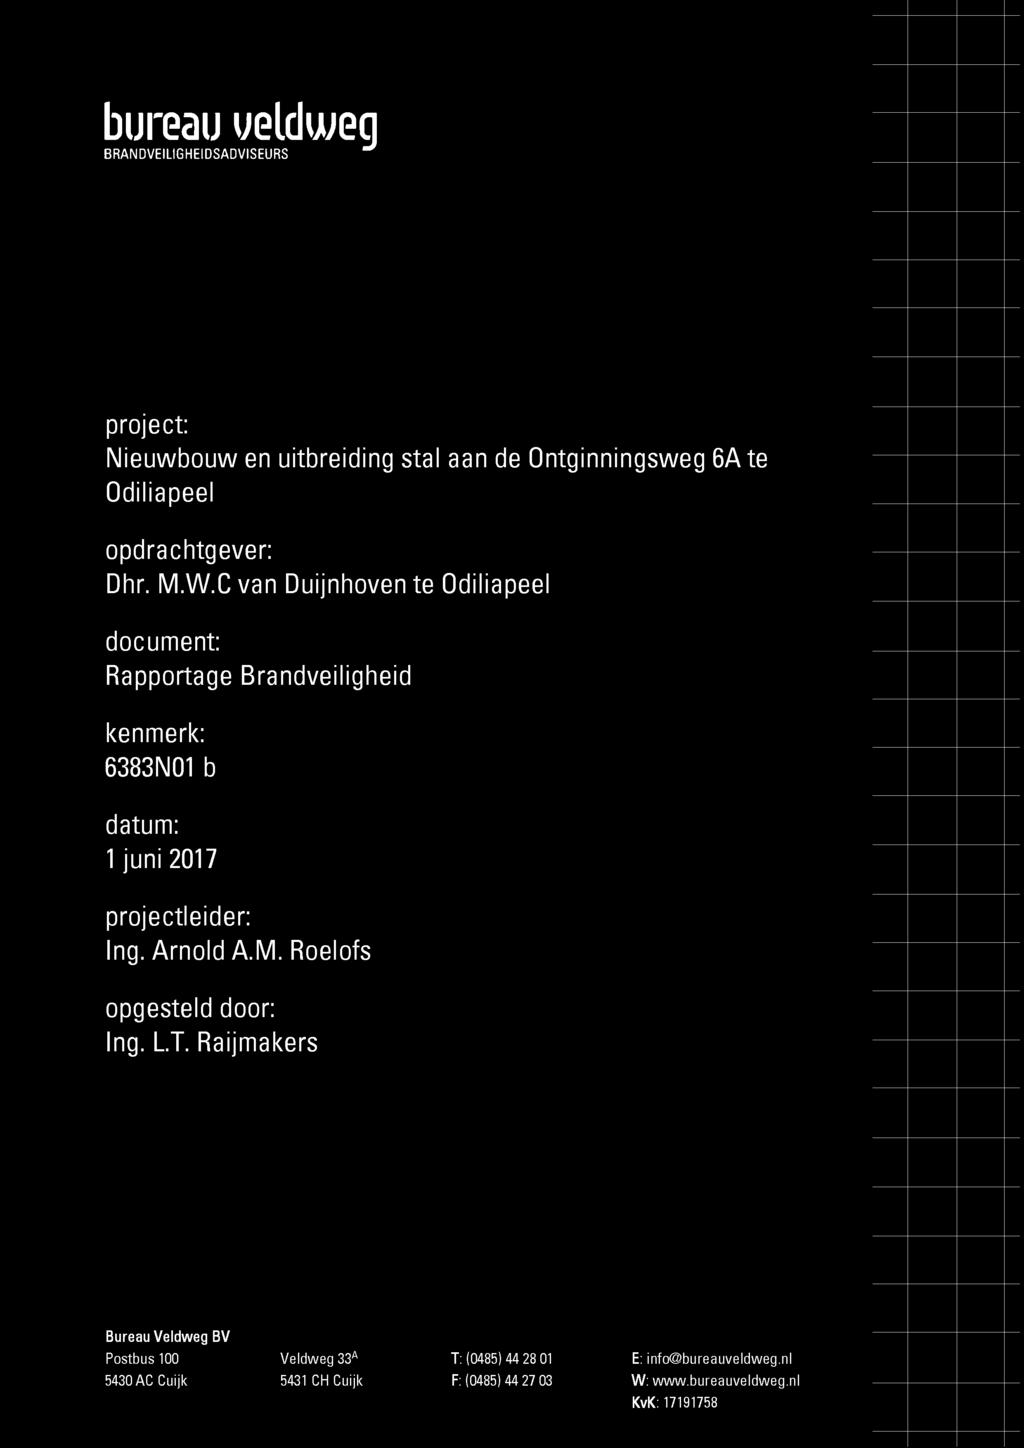 C van Duijnhoven te Odiliapeel document: Rapportage Brandveiligheid kenmerk: 6383N01 b datum: 1 juni 2017